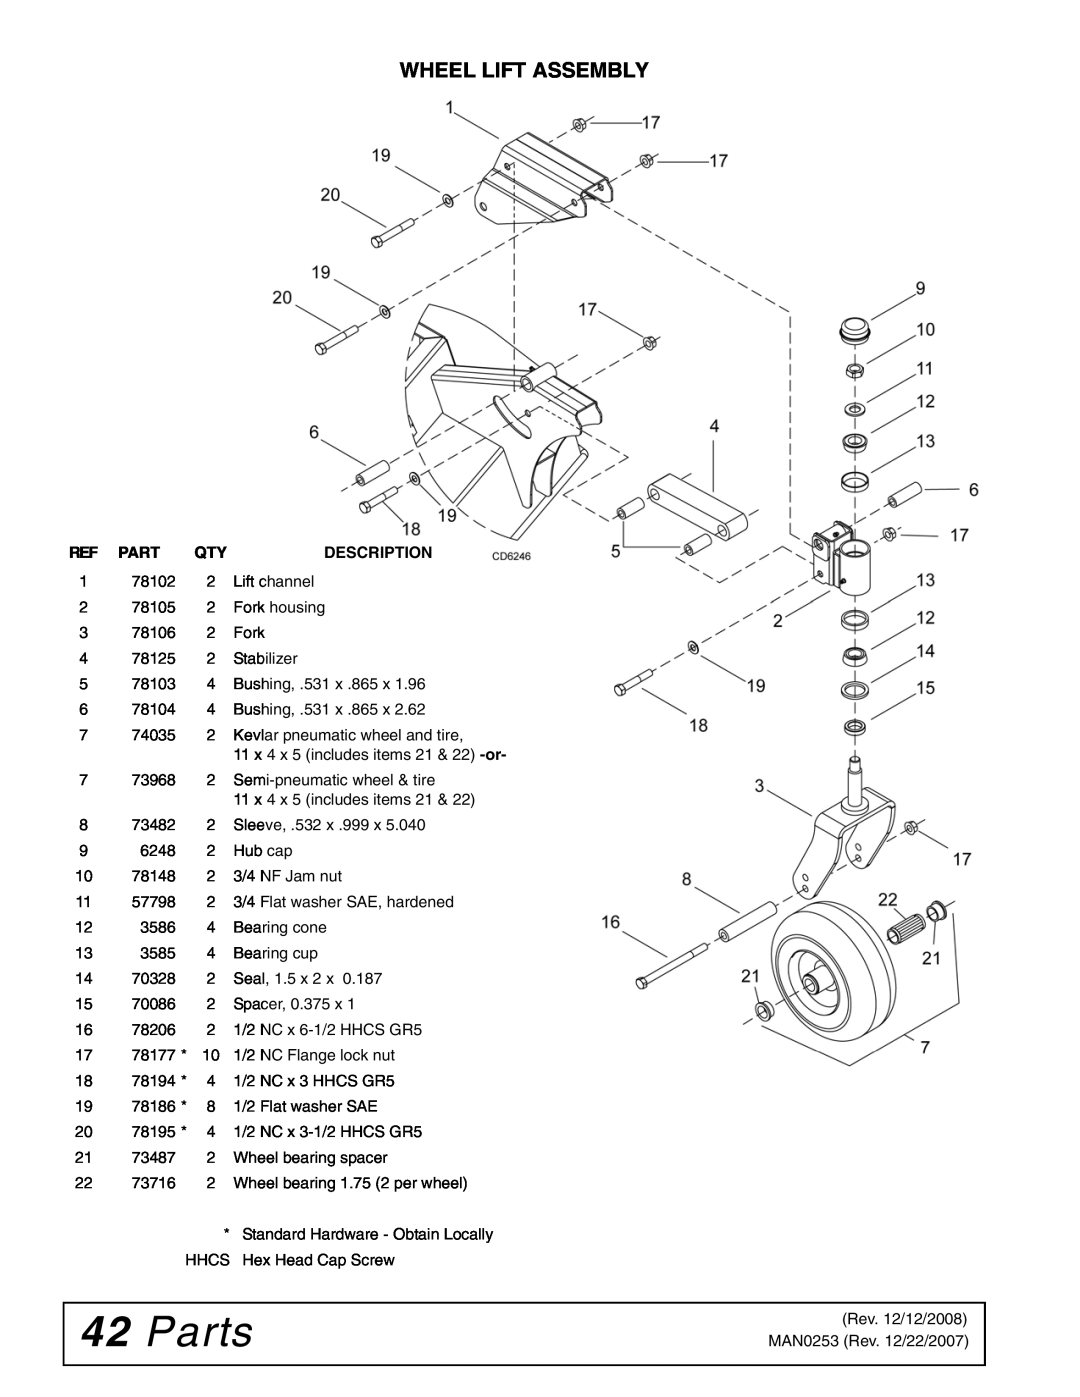 Woods Equipment MX61T, MX54T manual Parts, Wheel Lift Assembly 